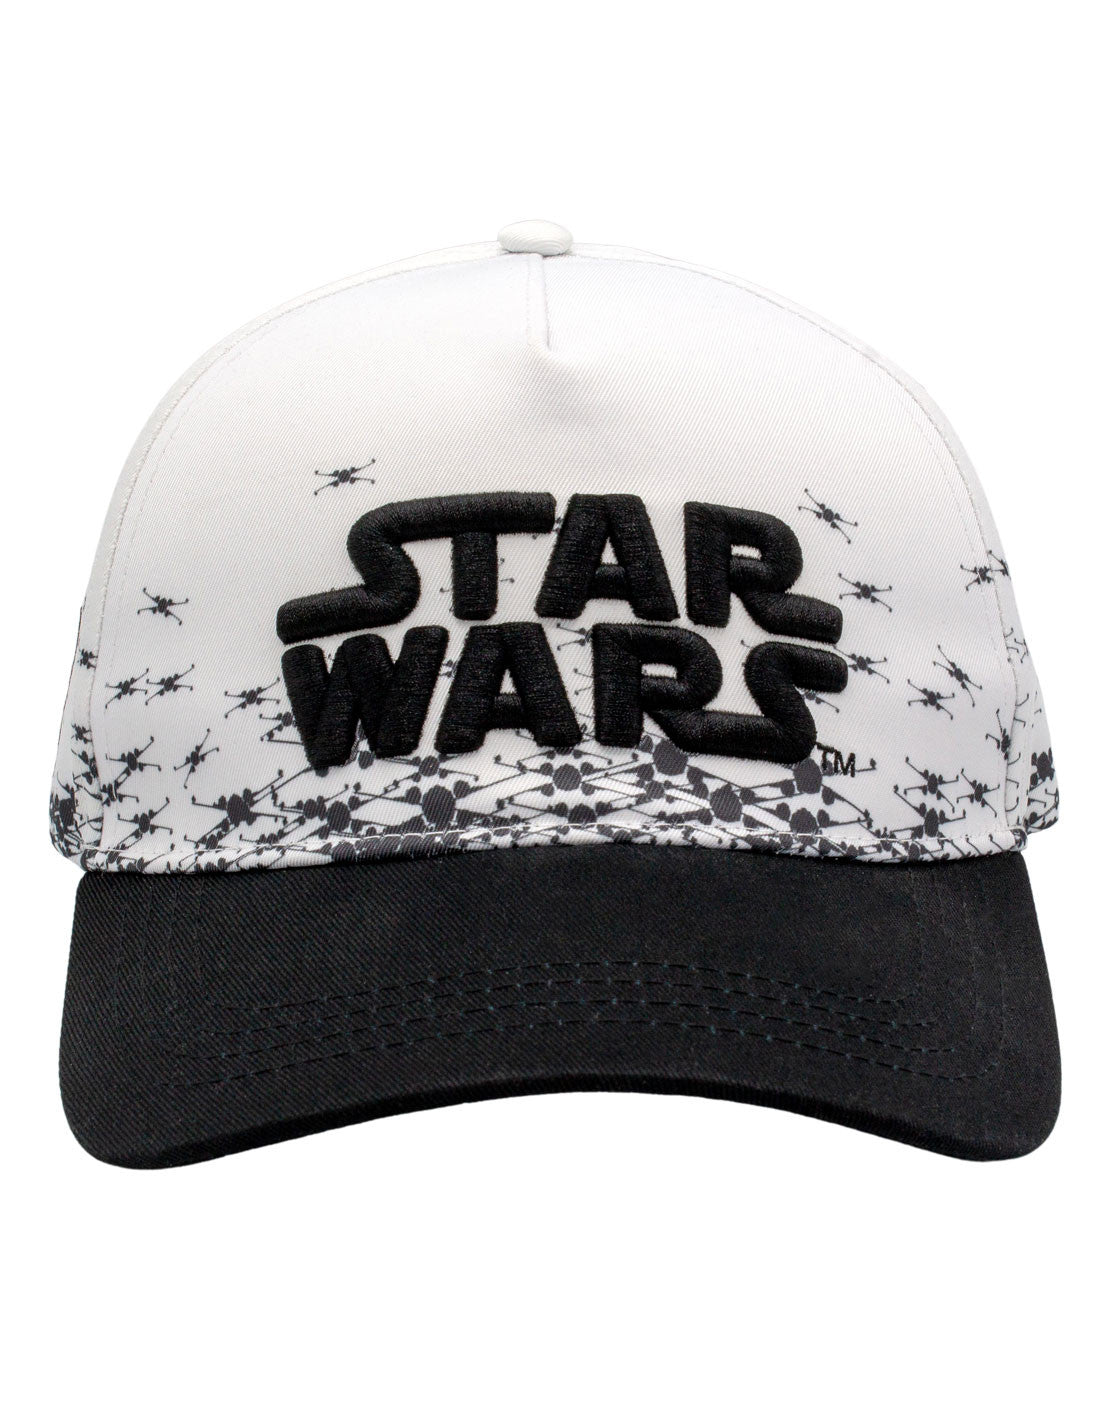 Star Wars Cap - Star Wars Logo